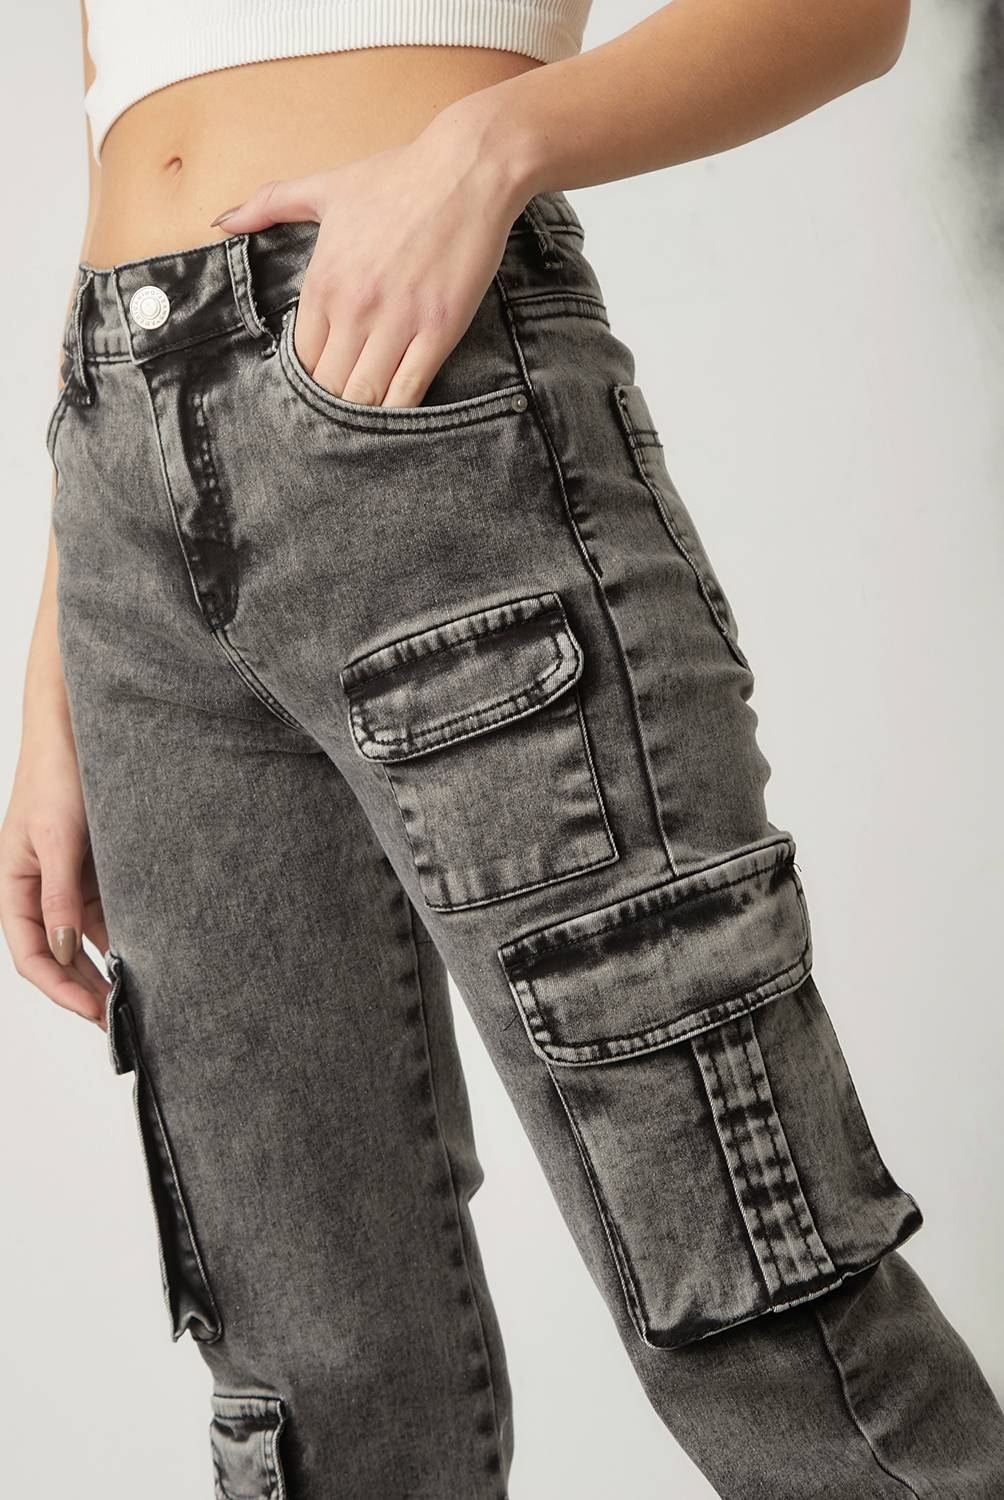 AMERICANINO - Americanino Jeans Cargo Tiro Medio Algodón Mujer